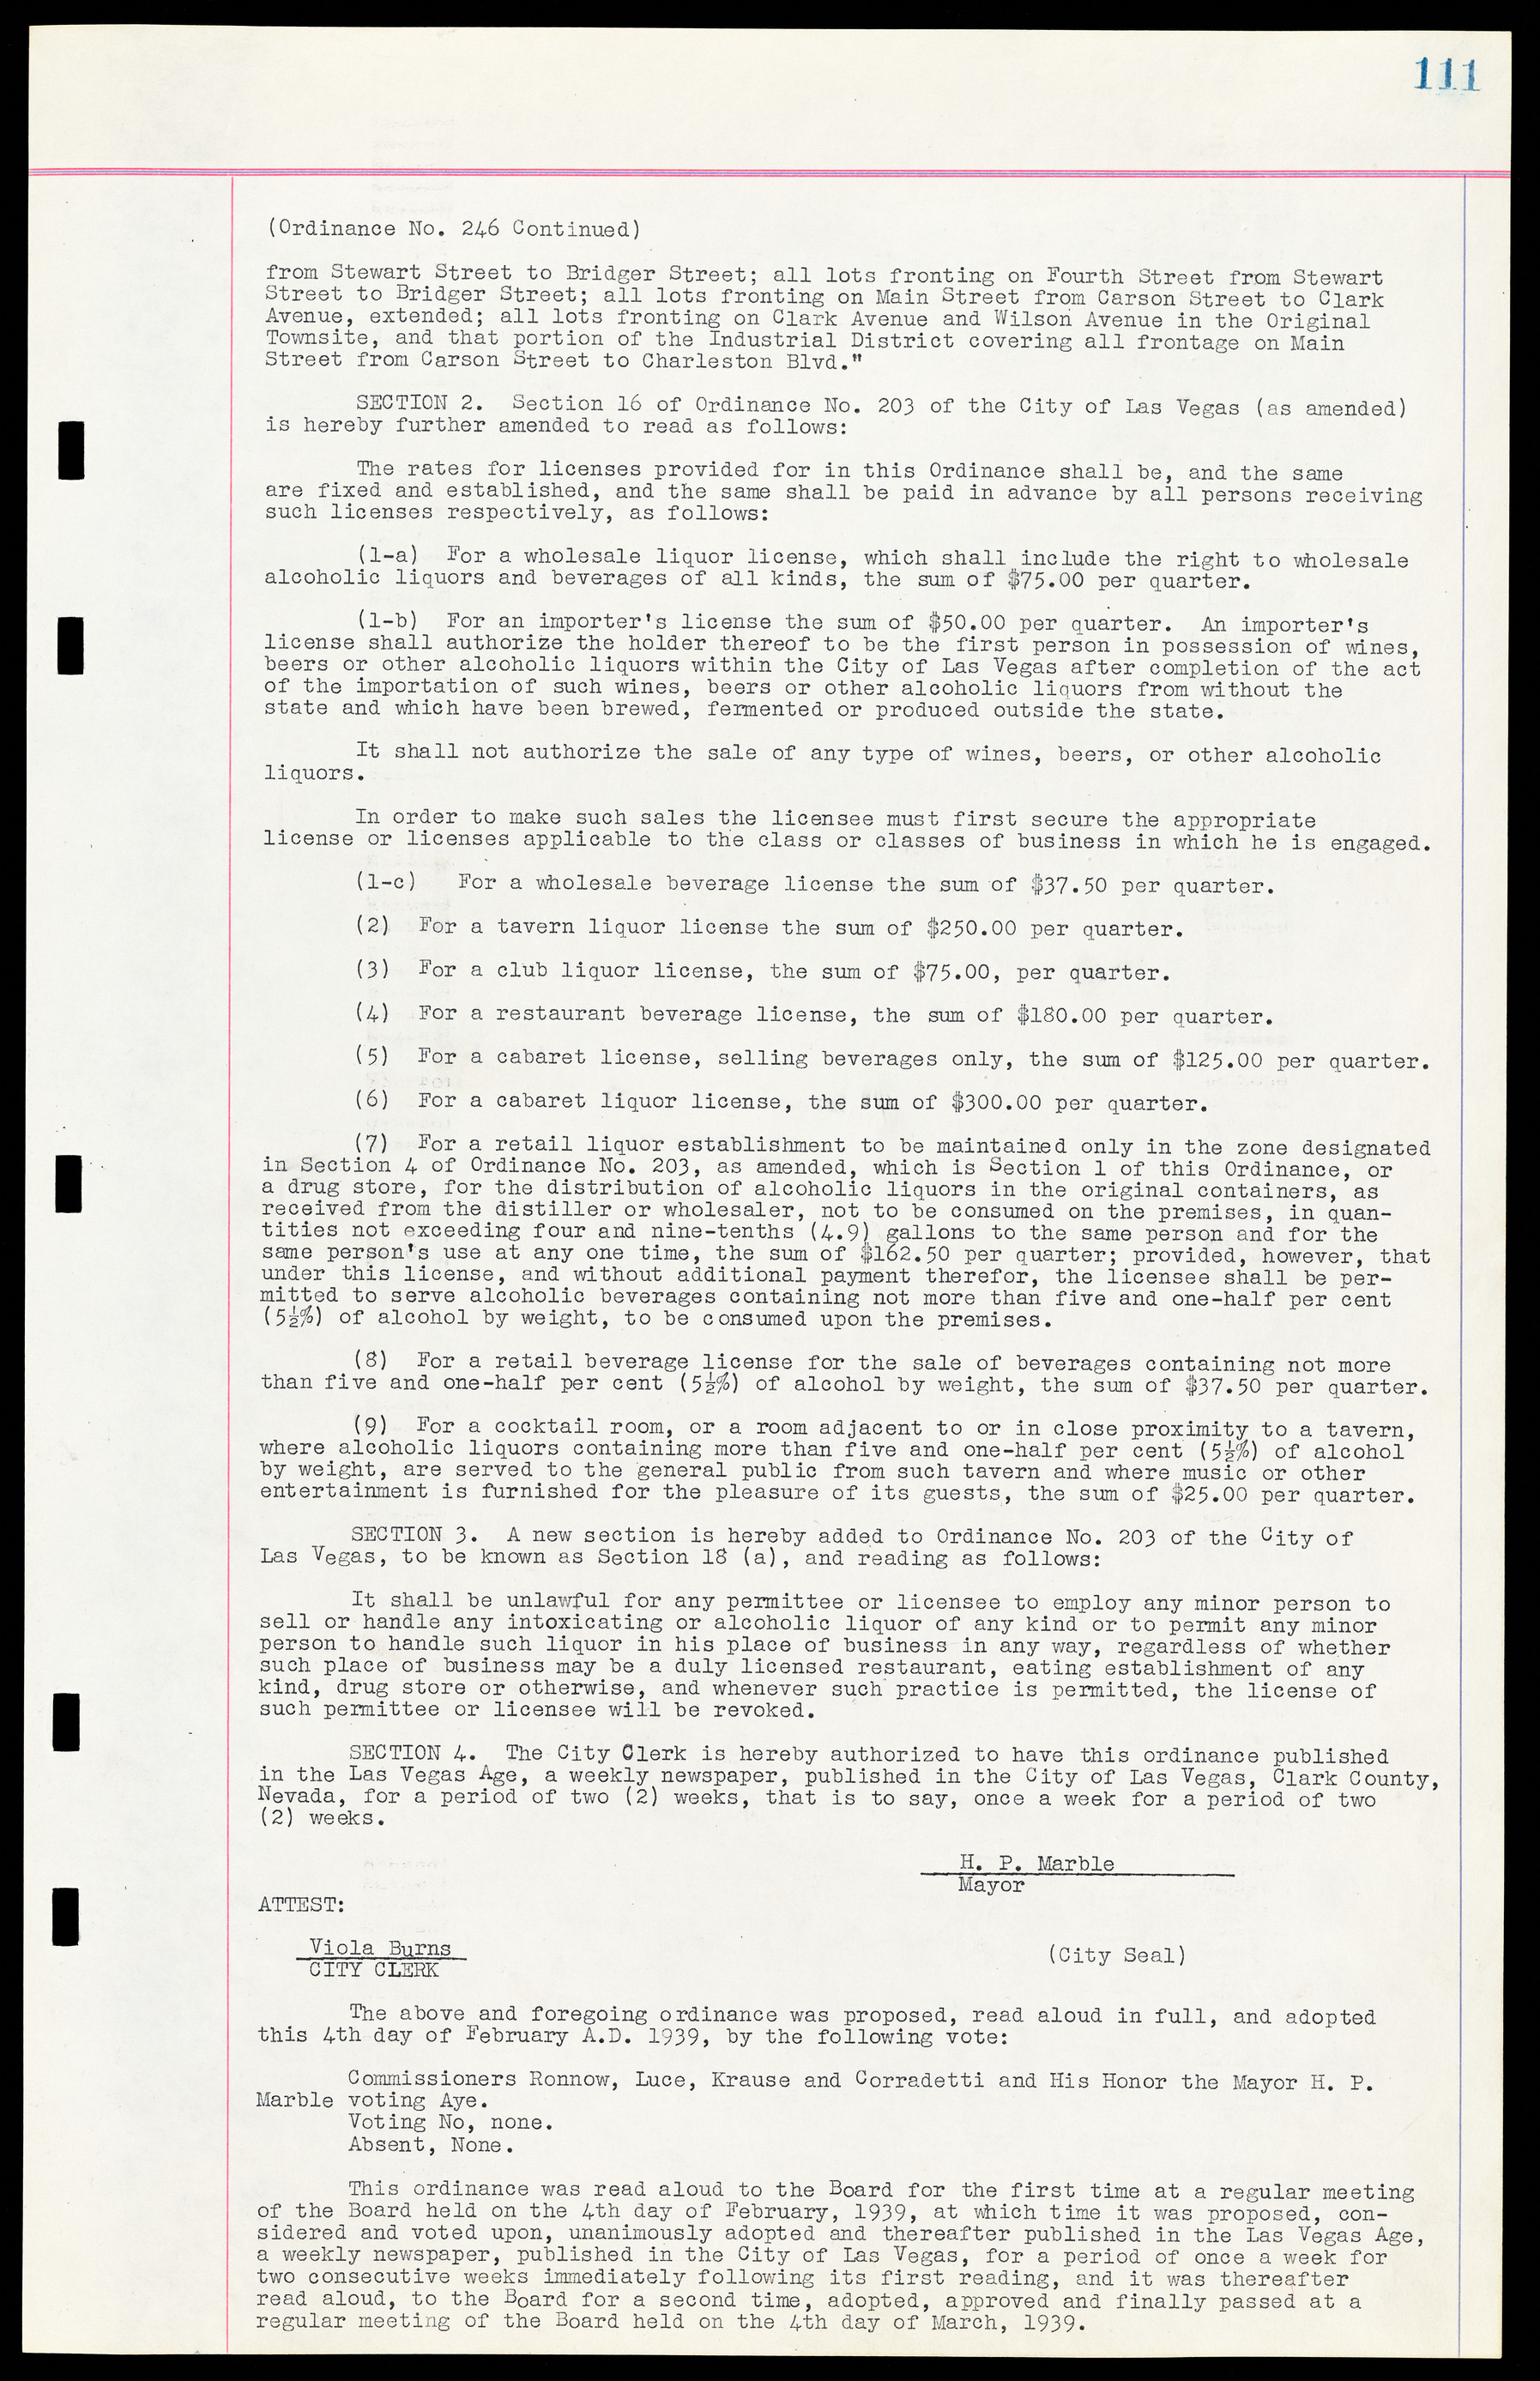 Las Vegas City Ordinances, March 31, 1933 to October 25, 1950, lvc000014-131